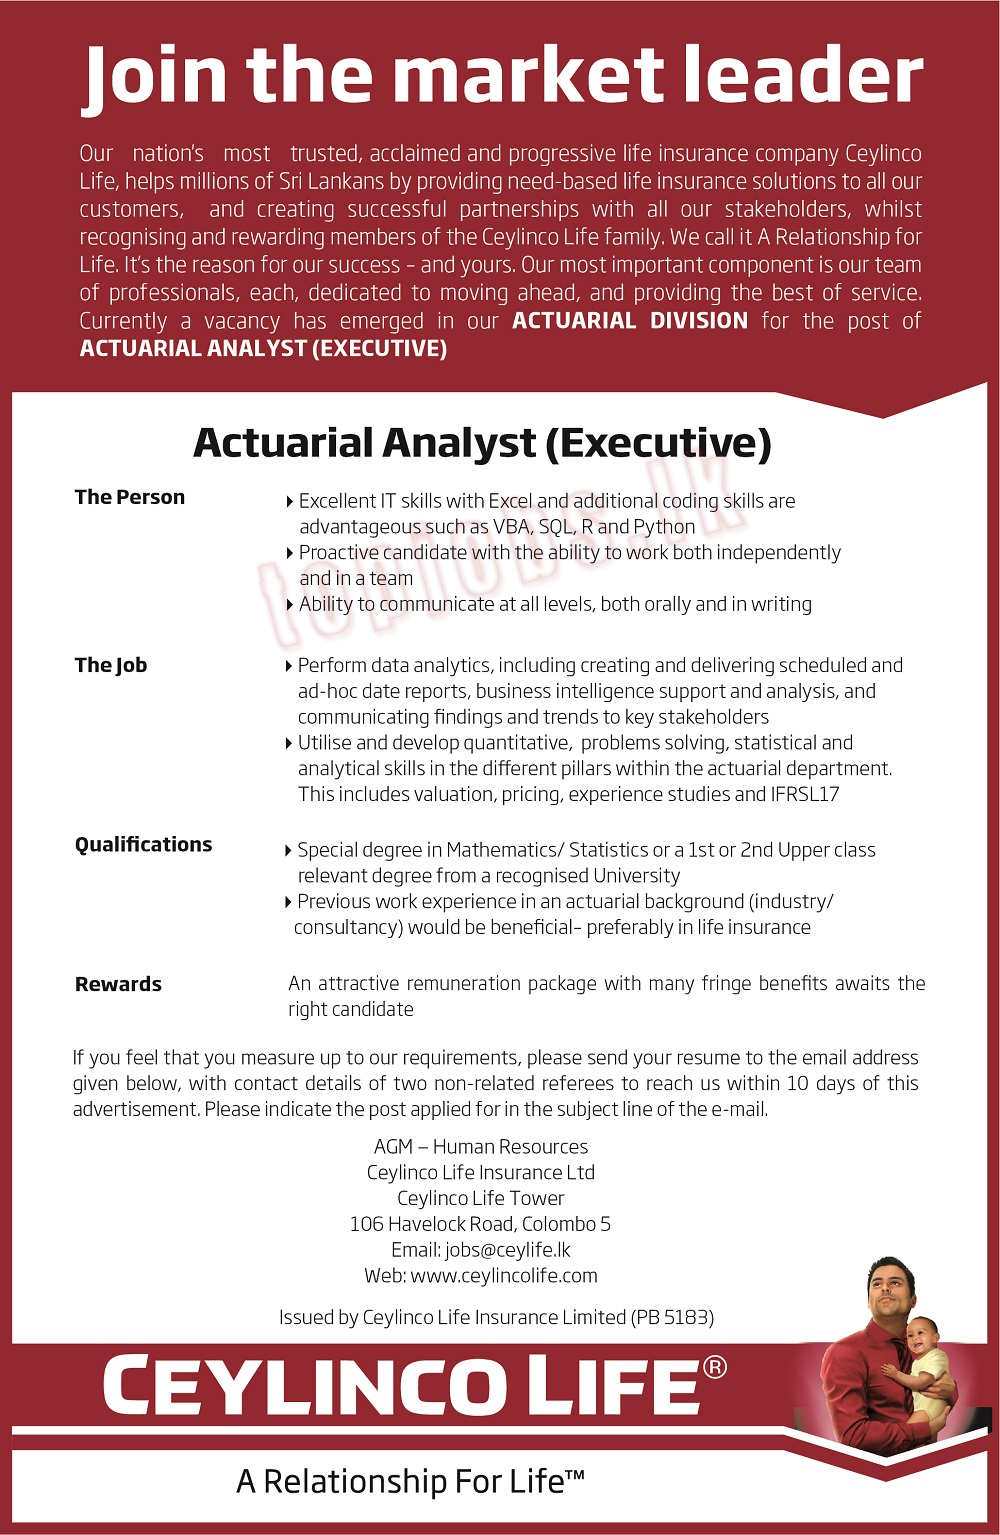 Actuarial Analyst (Executive) Vacancy - Ceylinco Life Insurance Jobs Vacancies